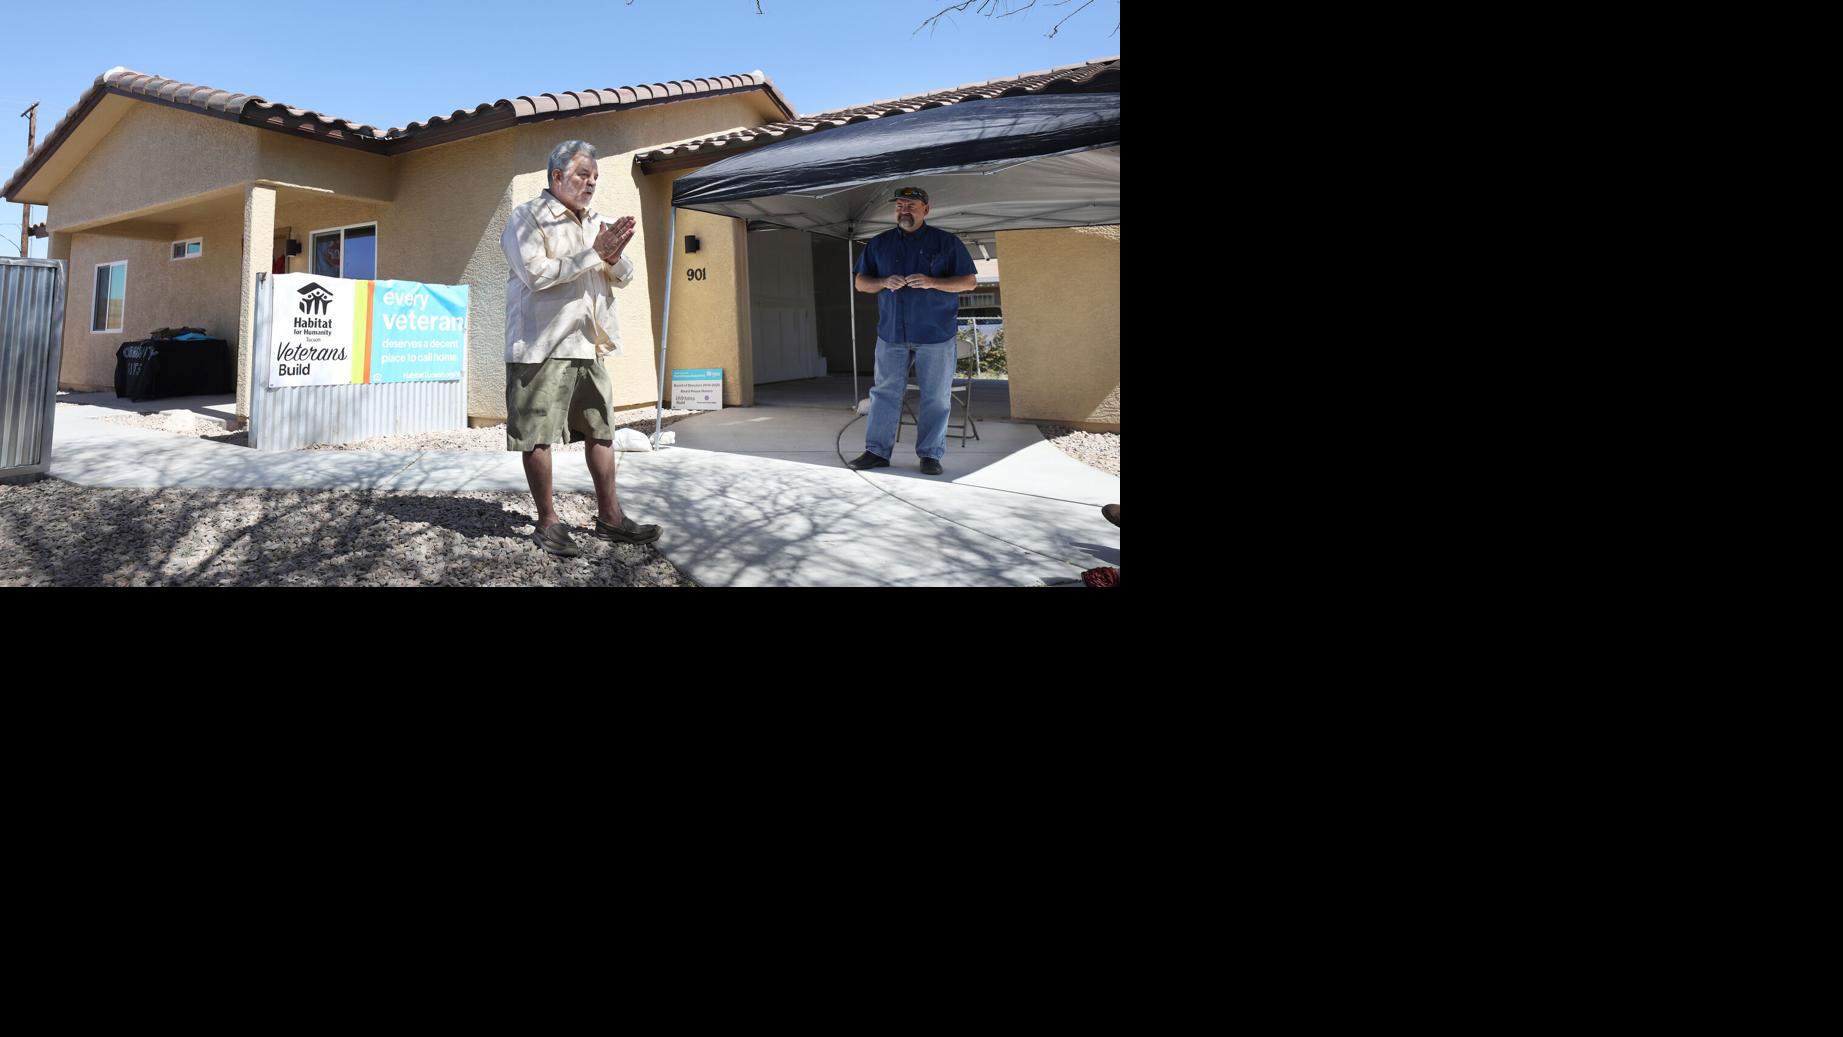 Tucson veteran receives new Habitat for Humanity home